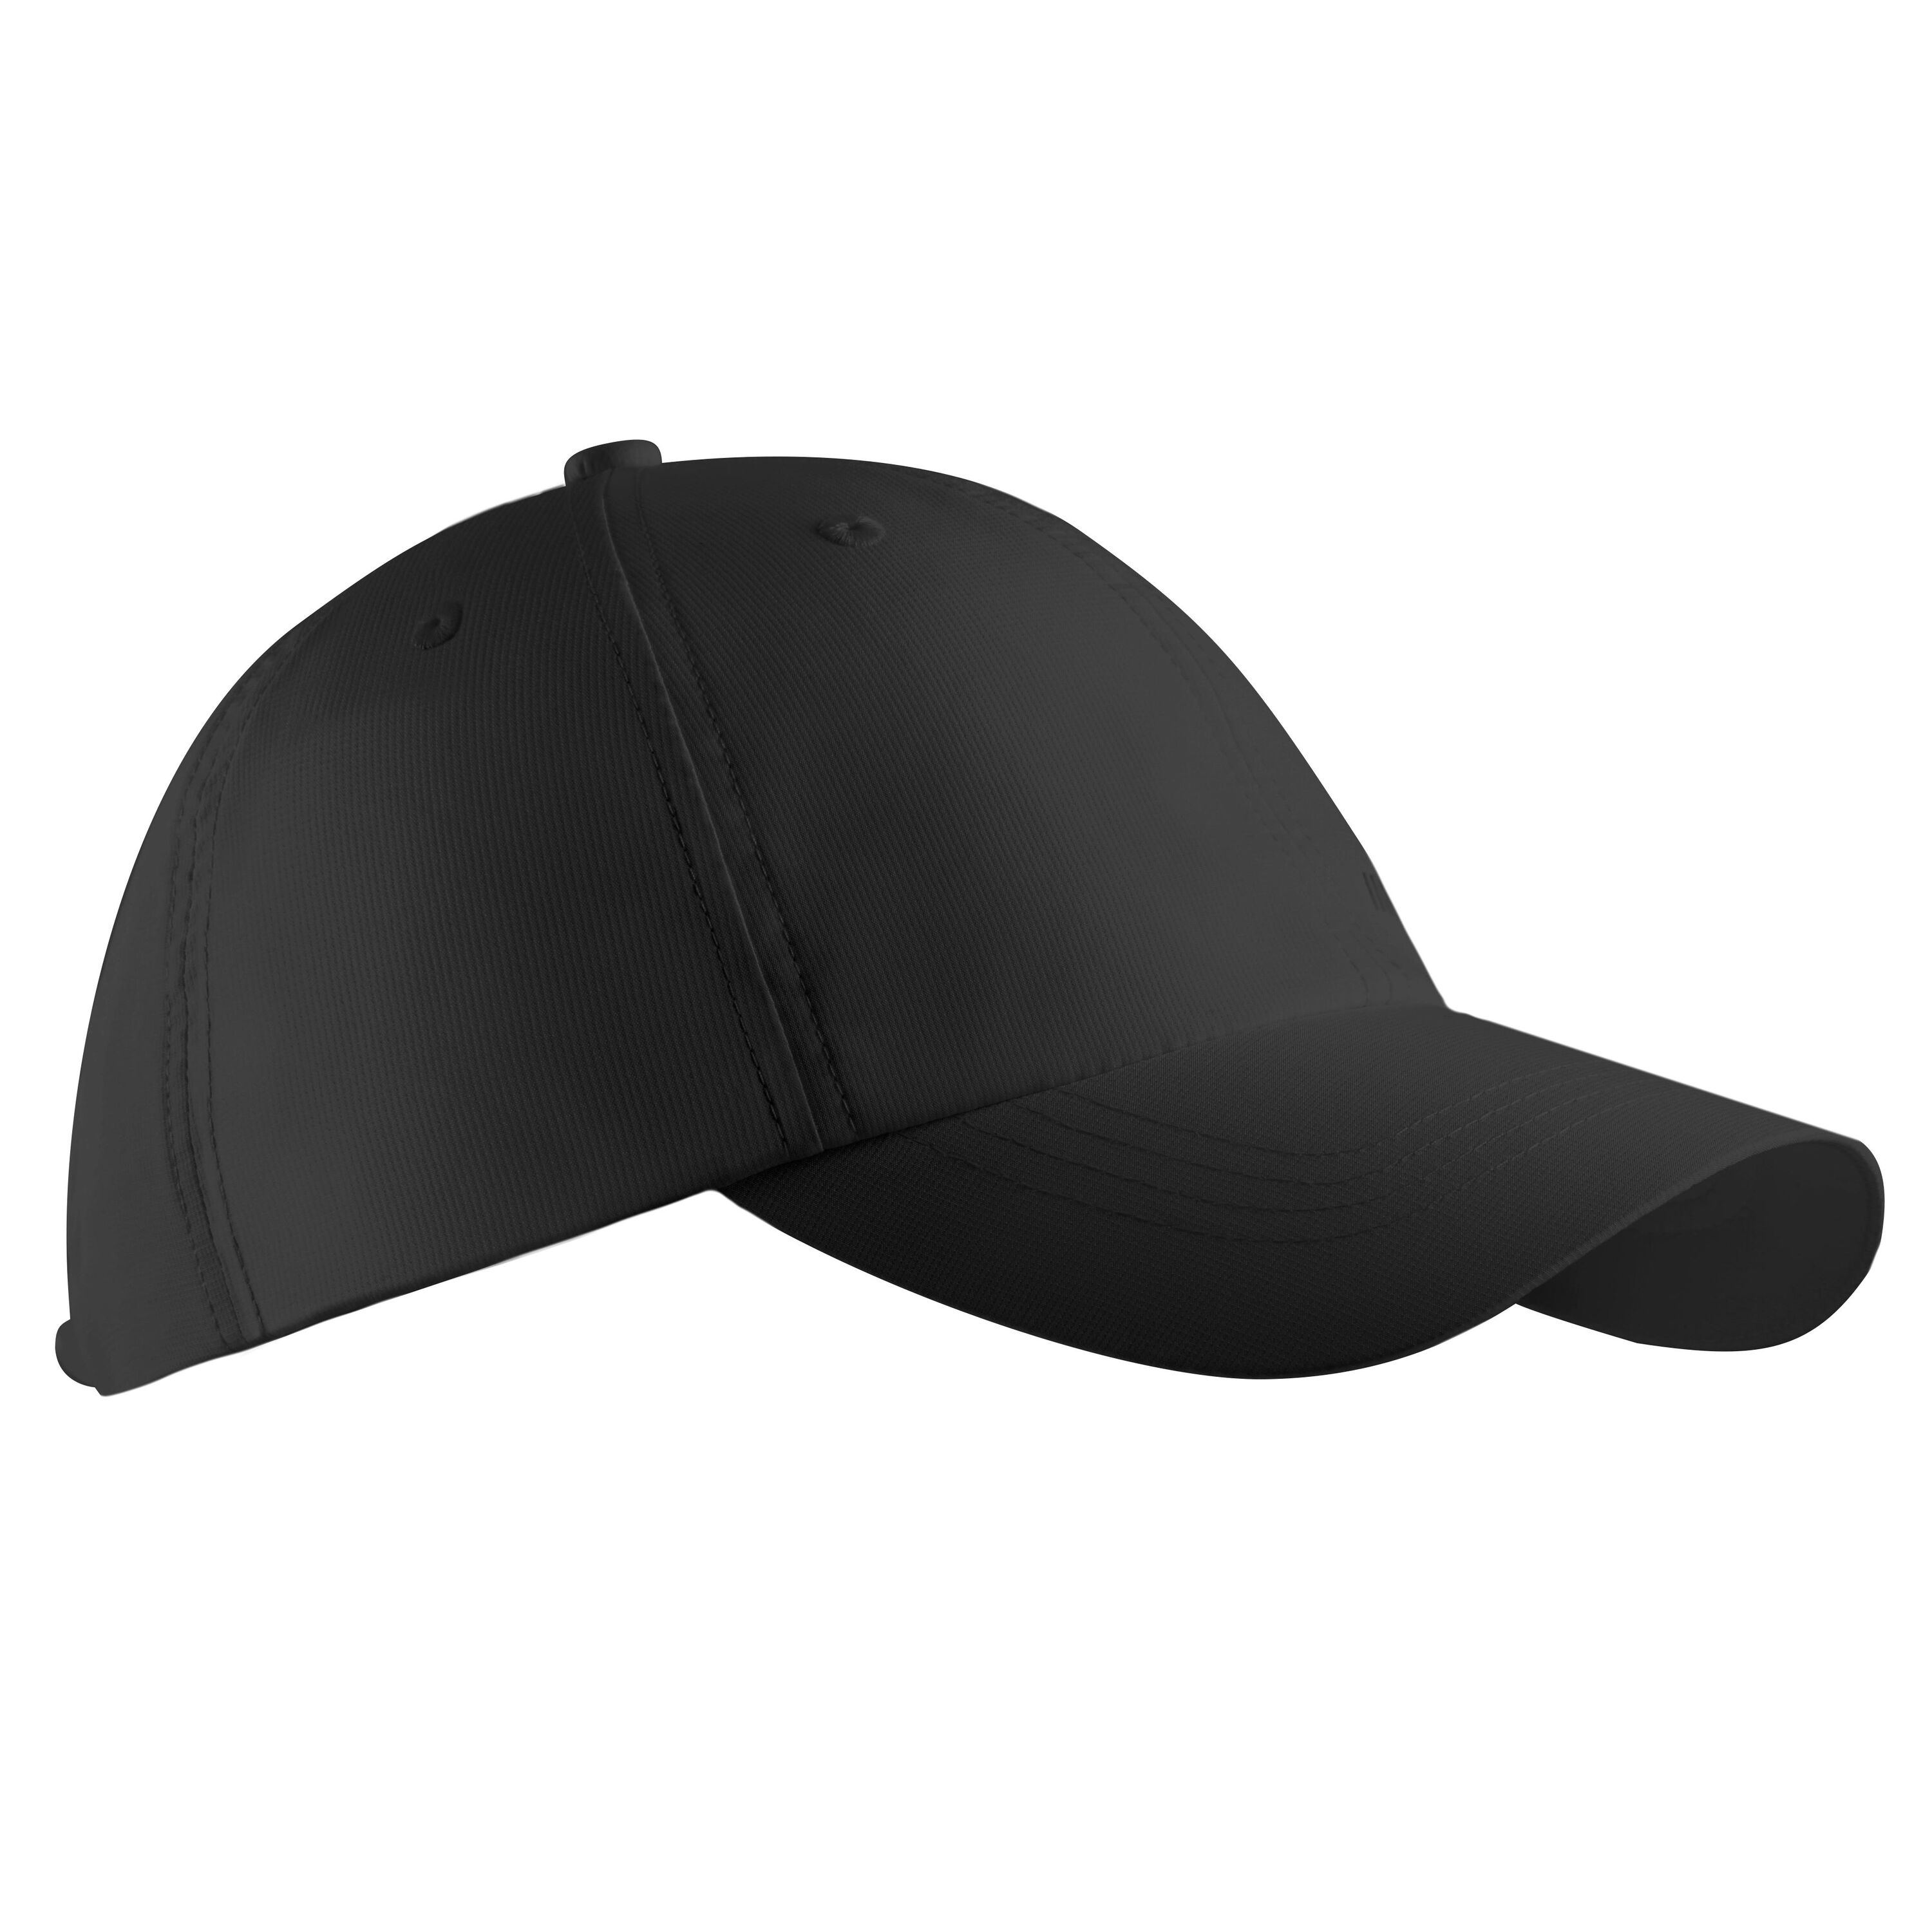 INESIS Adults' Golf Cap - WW 500 Black